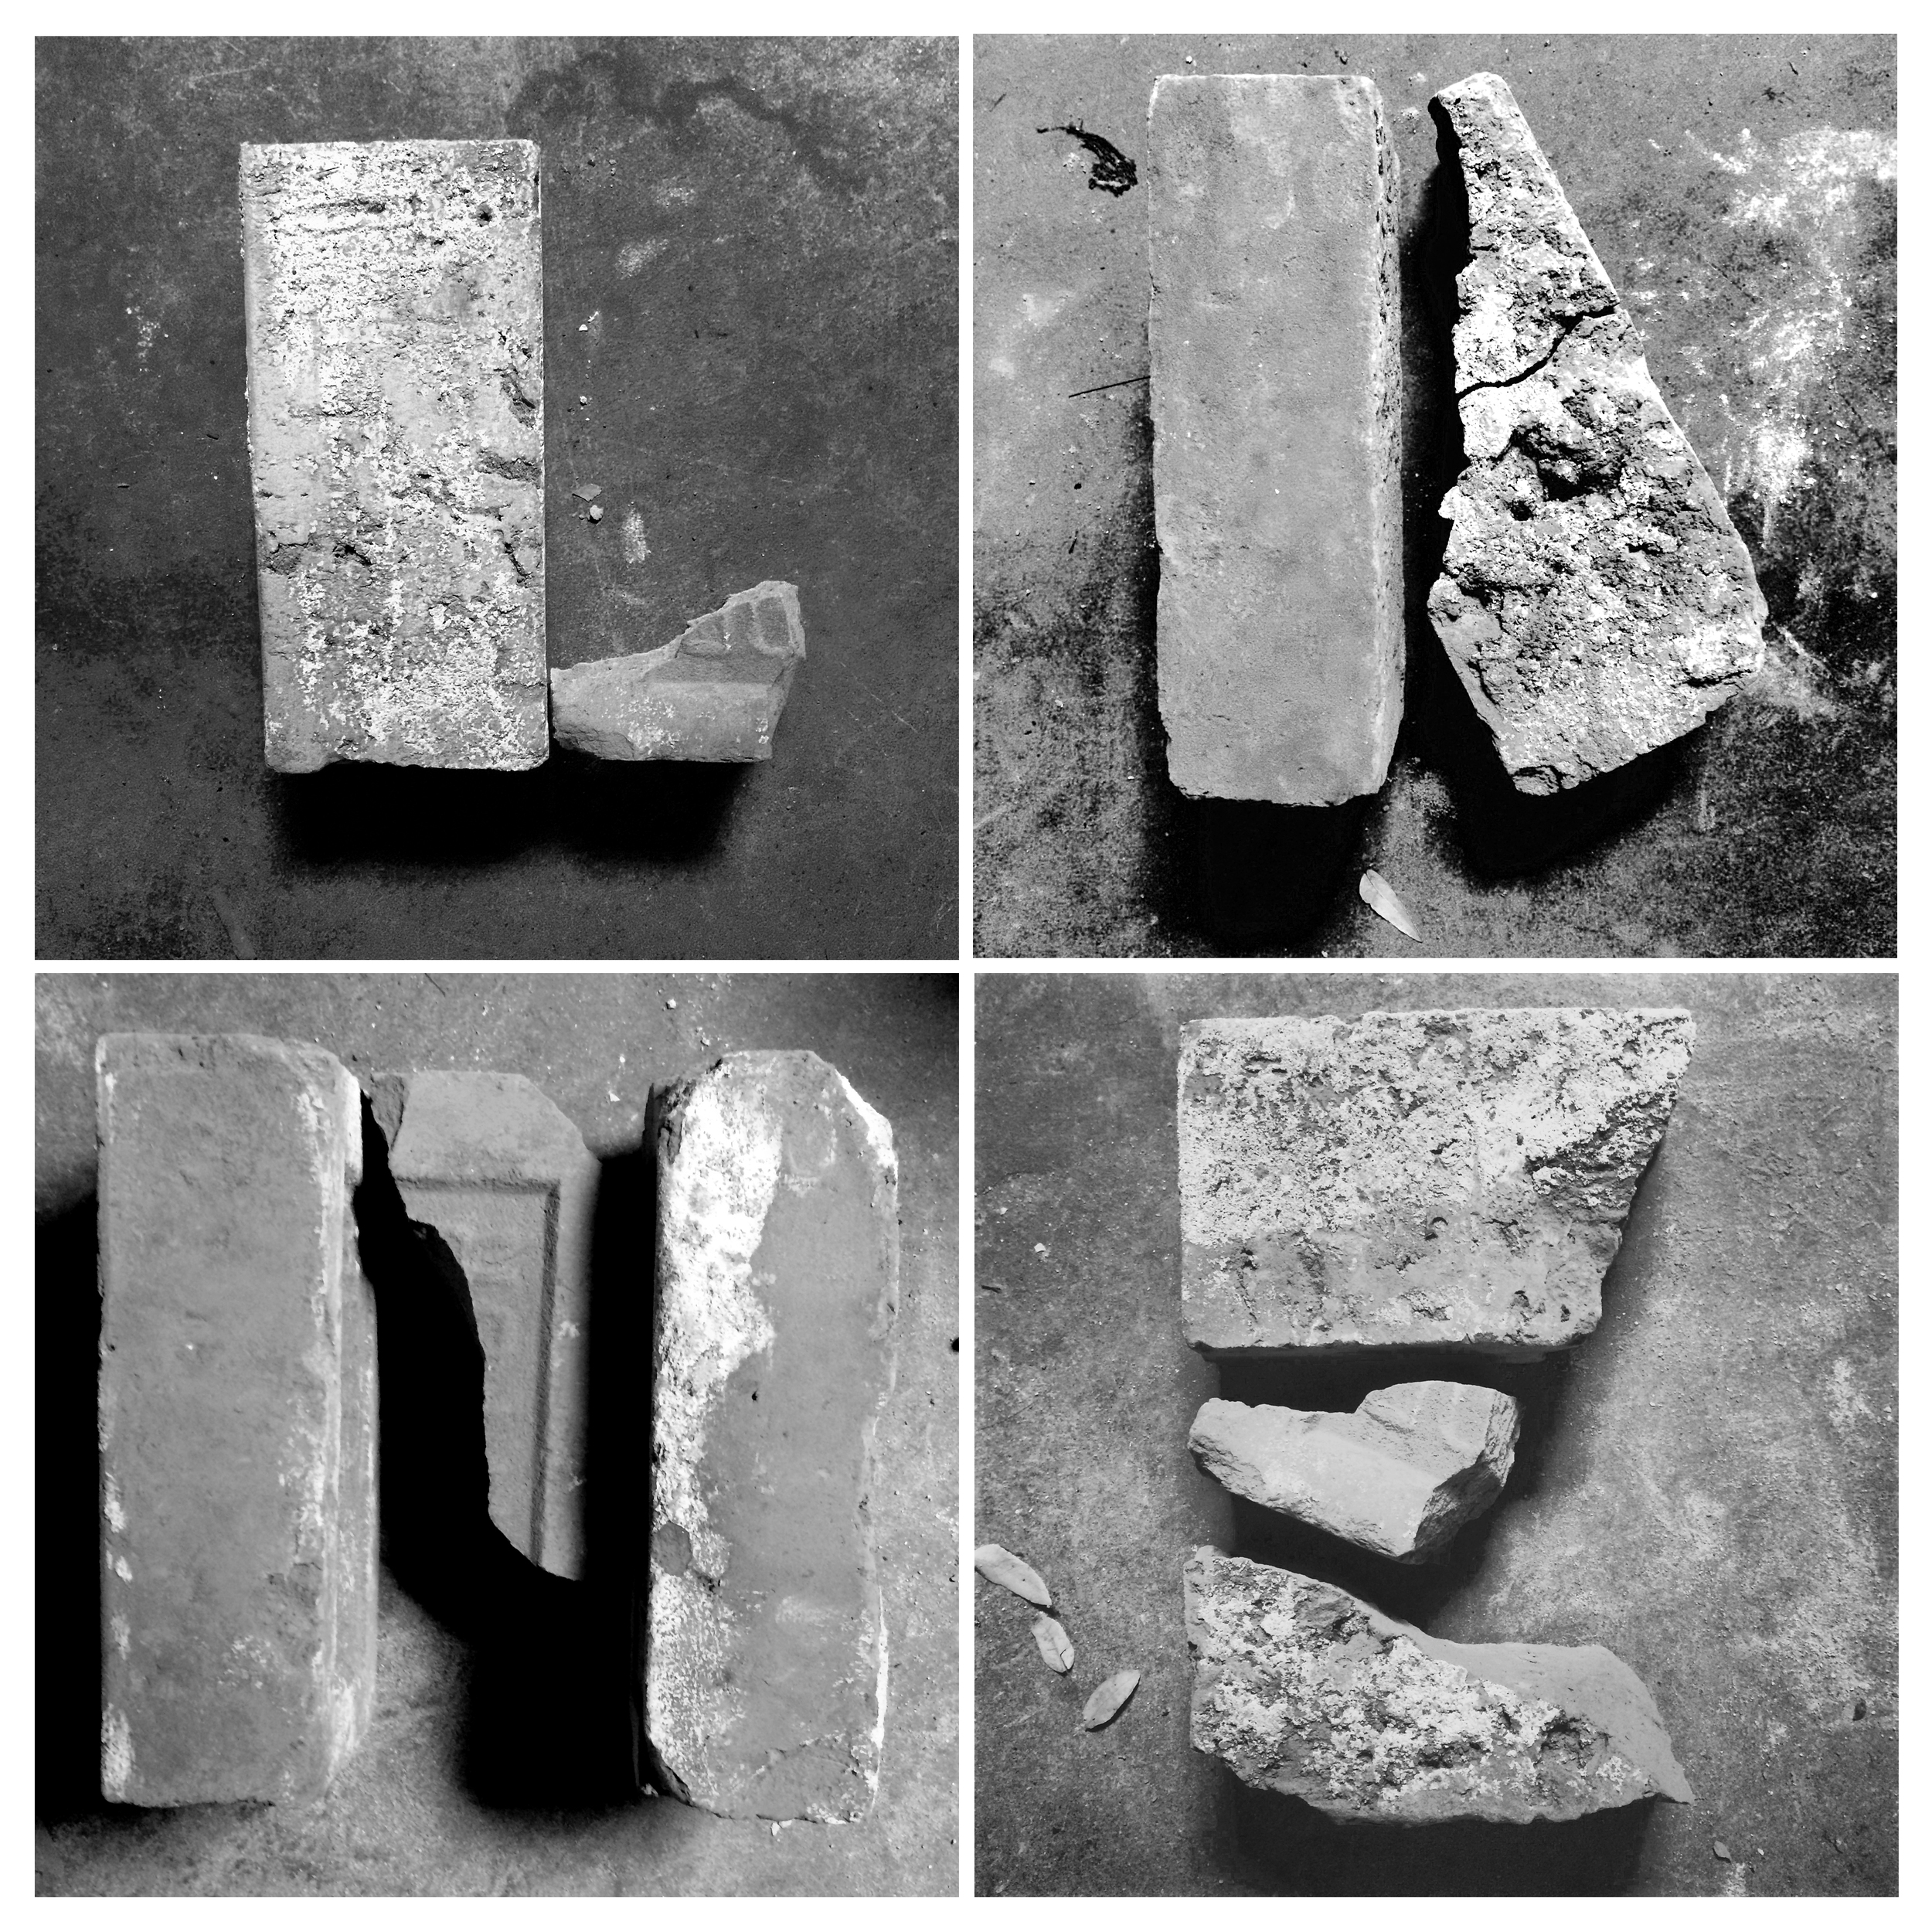 "Mentor" Typeface using bricks